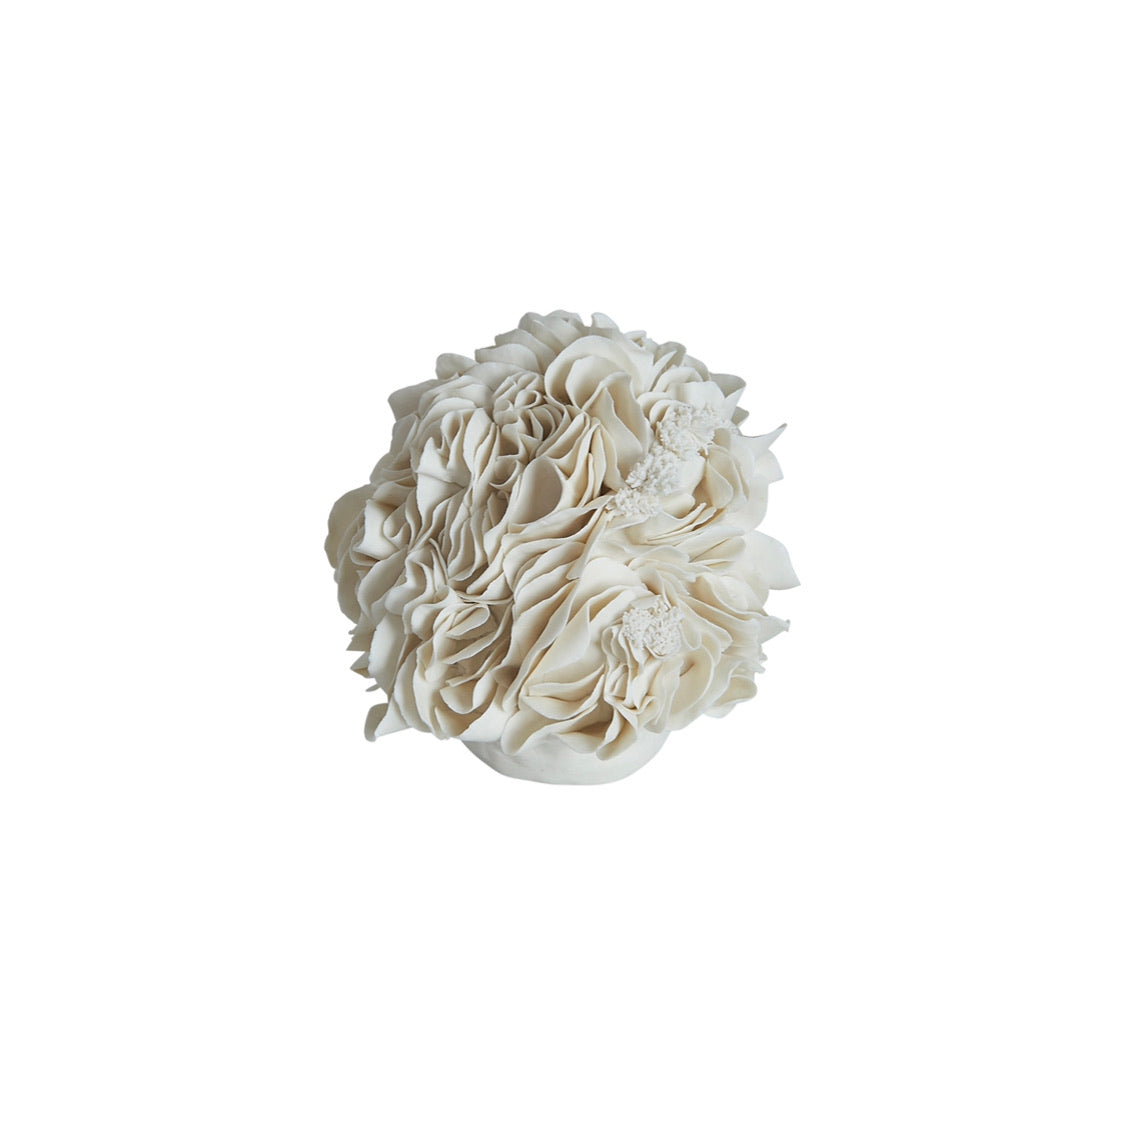 Porcelain Coral Sculpture by Lucinda Kirkby